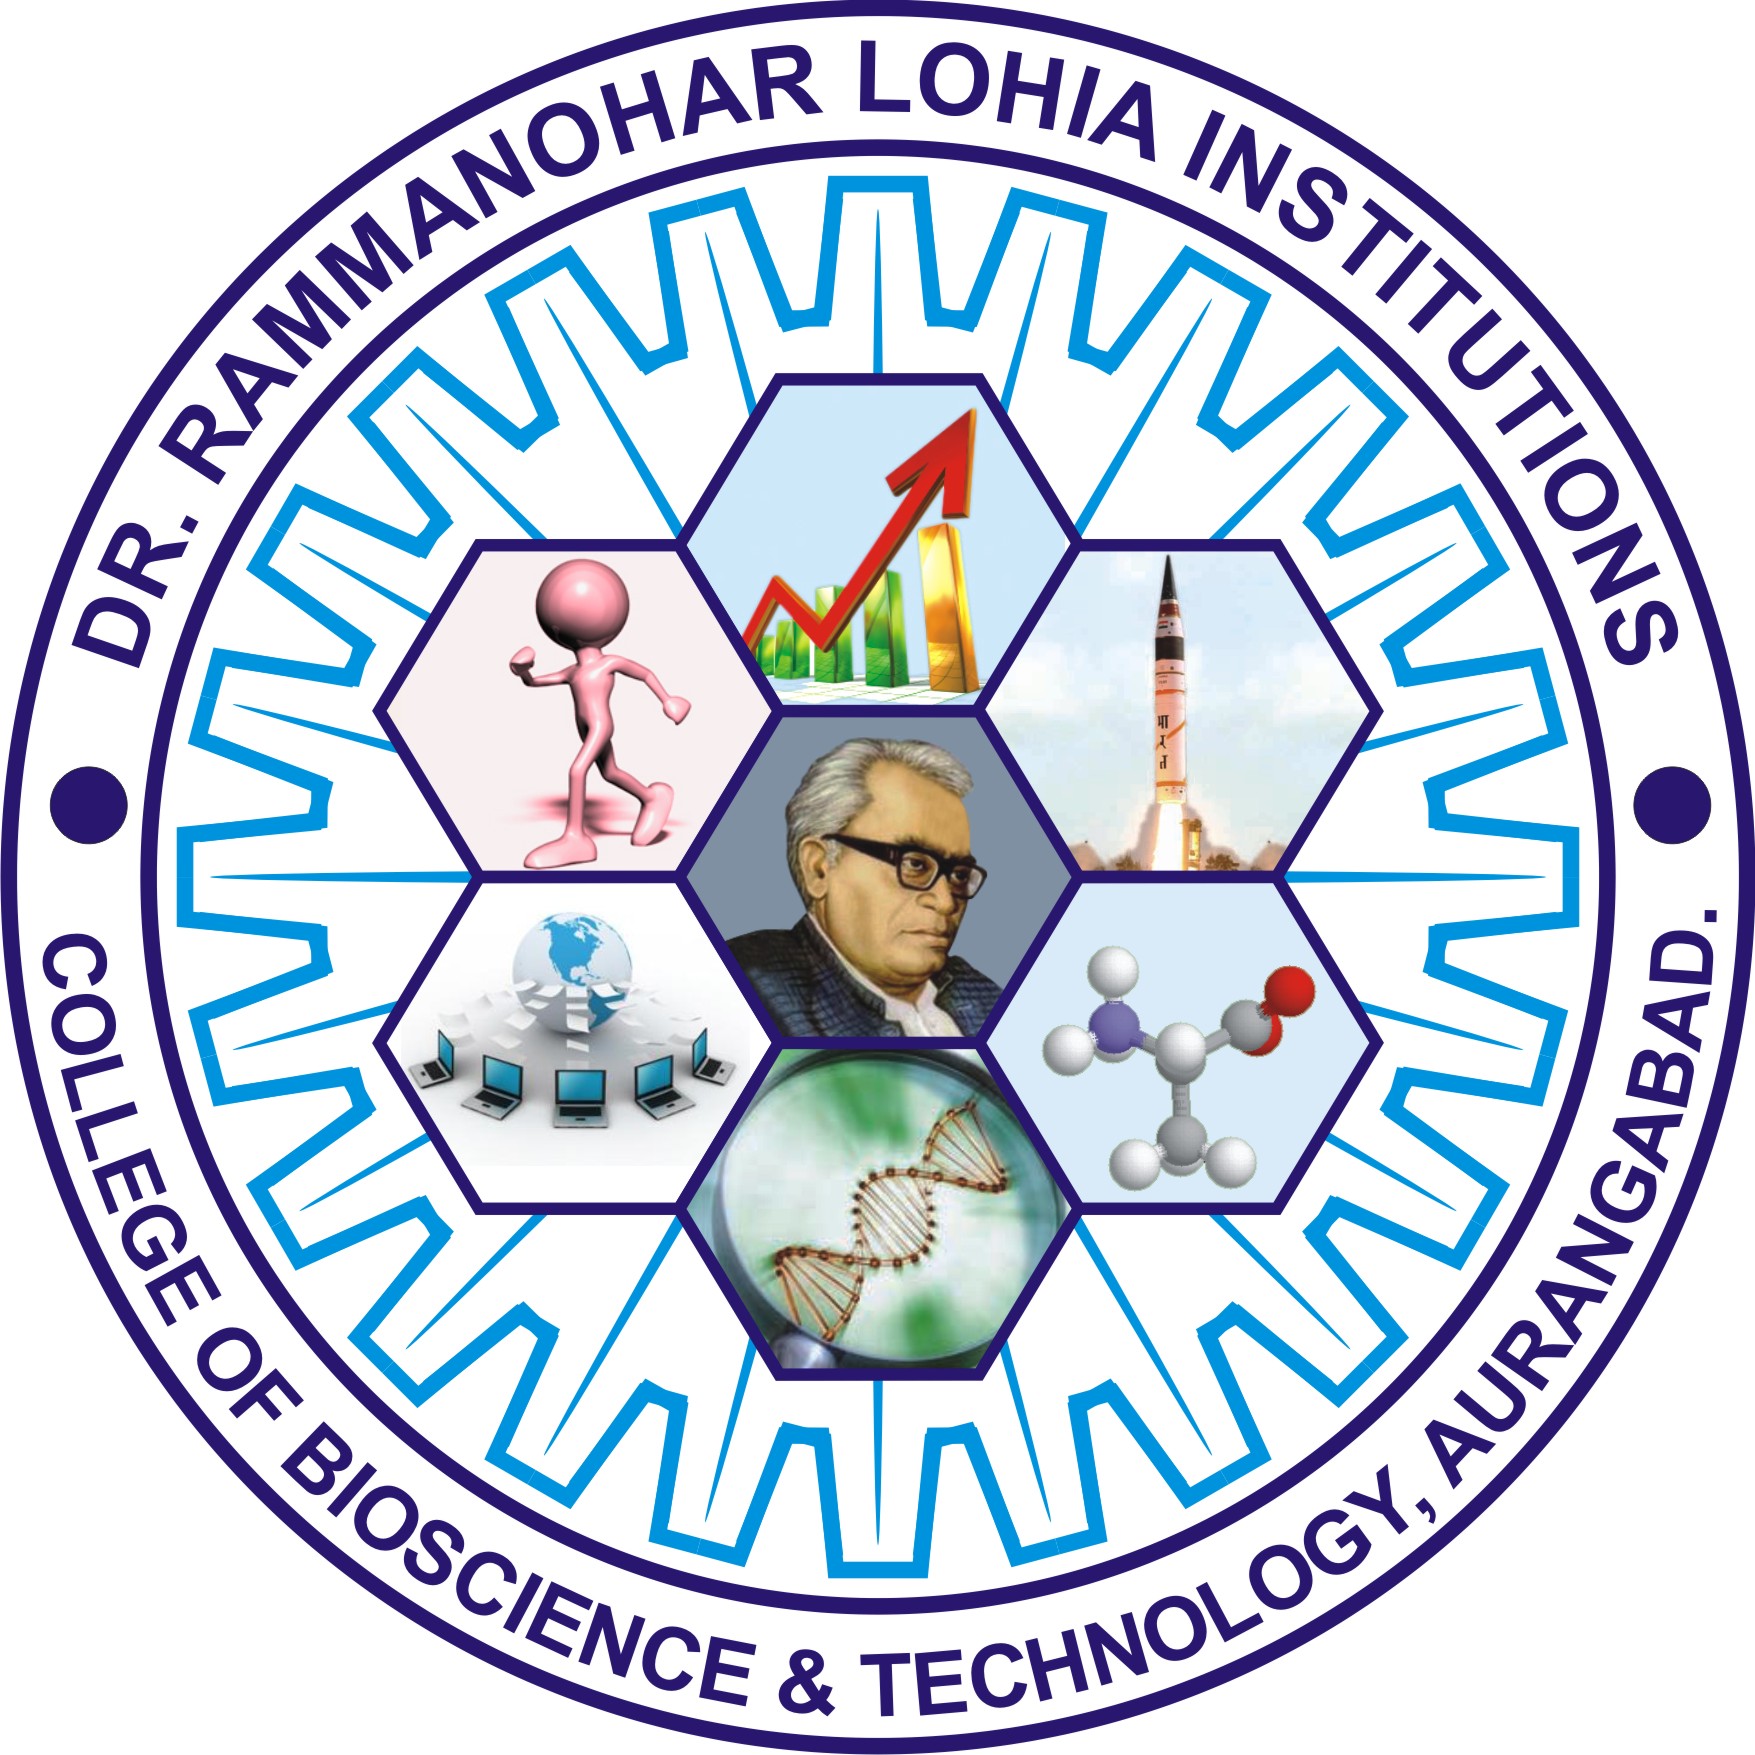 Dr. Ram Manohar Lohia Institution's College of Bioscience and Technology, Aurangabad